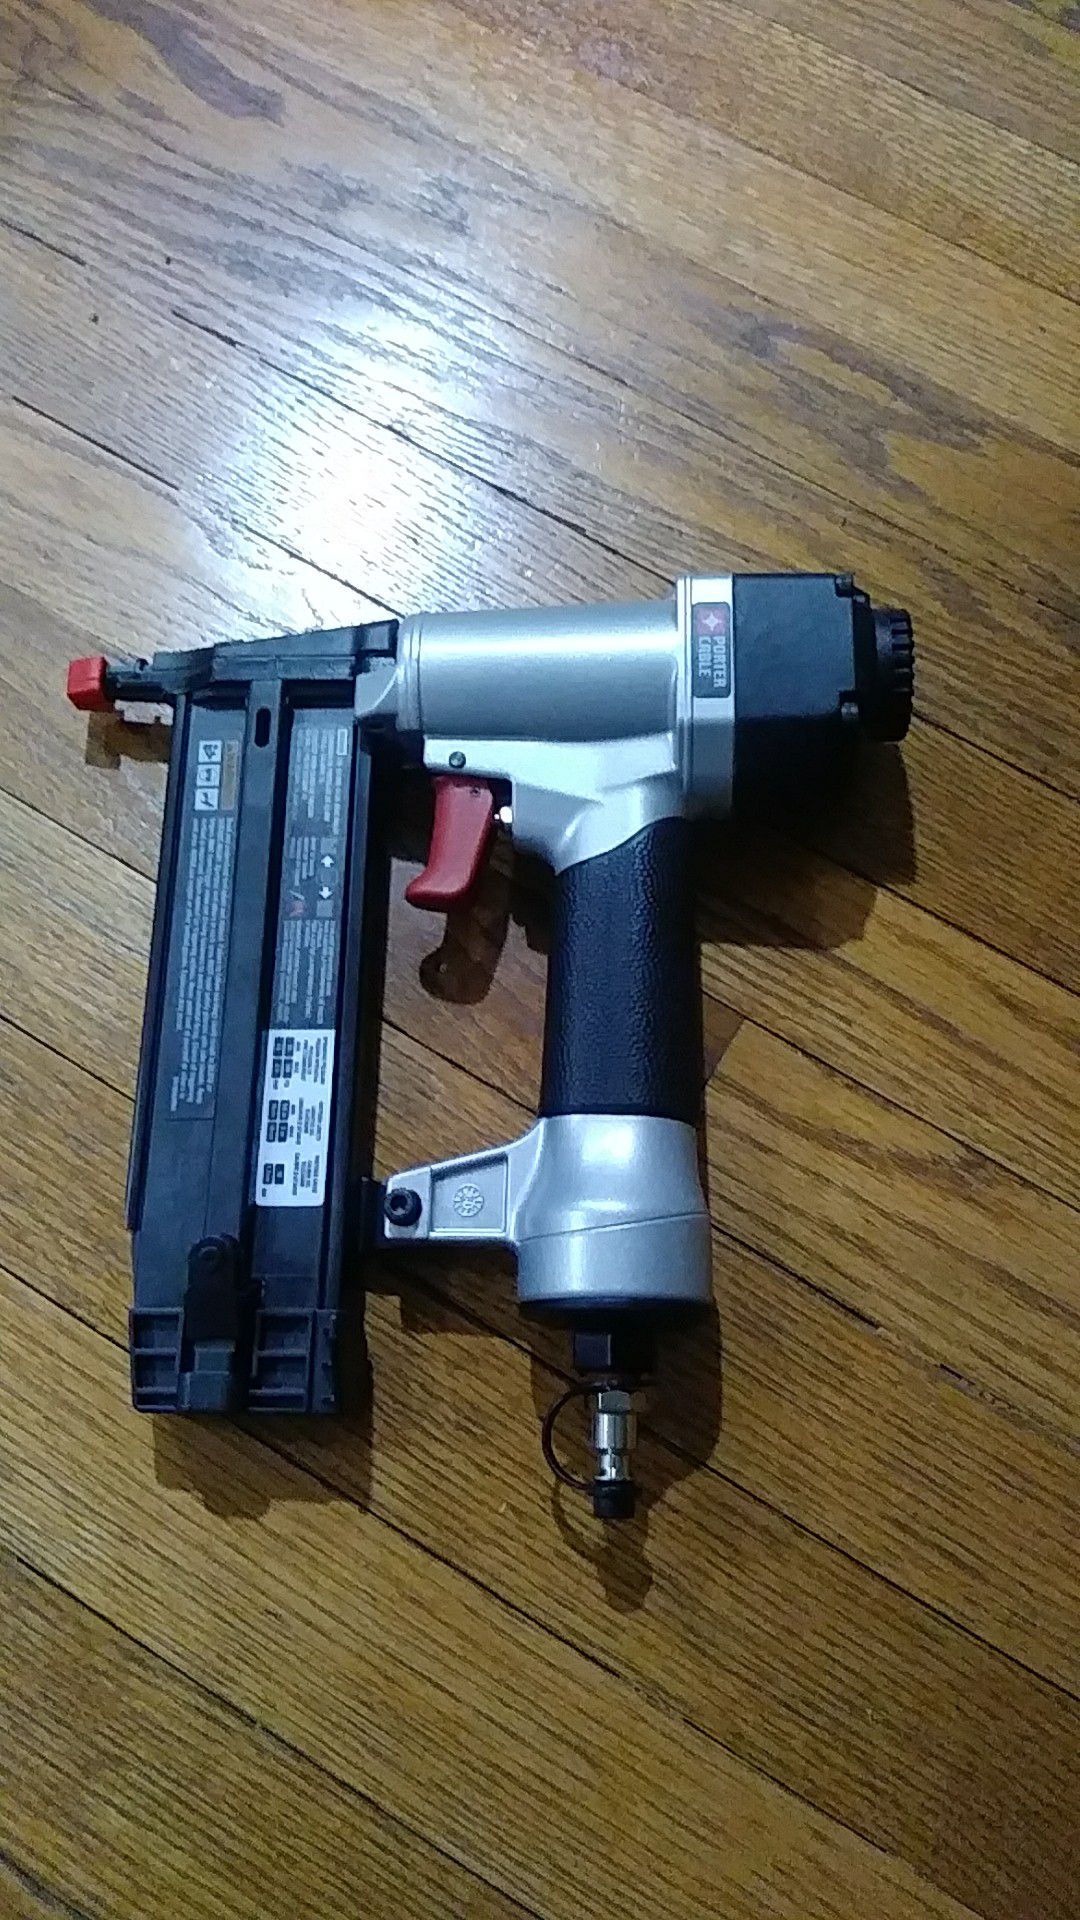 Tool pistola de aire